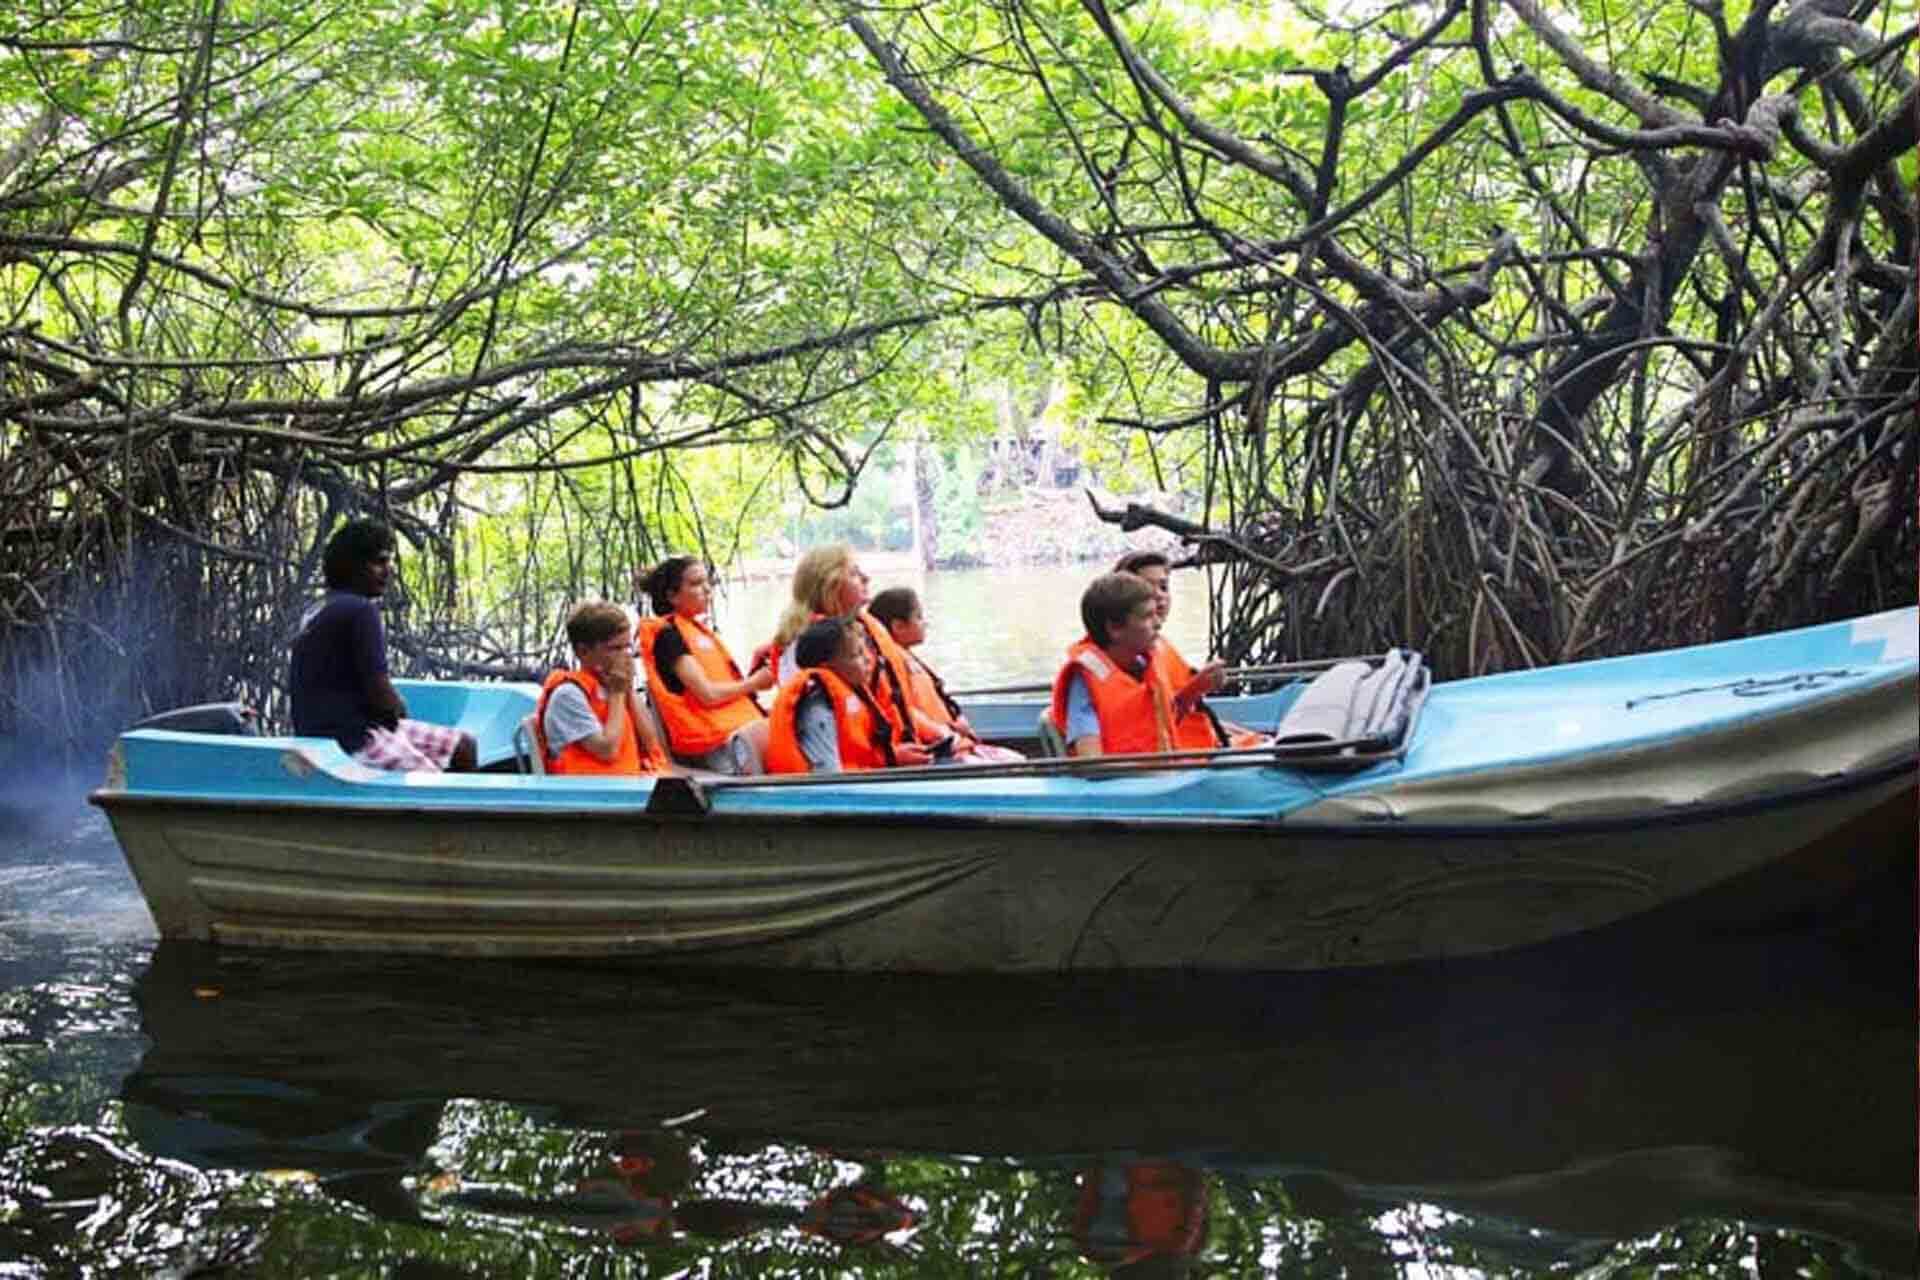 Tourists explore the nature of Bentota flora and fauna in Sri Lanka